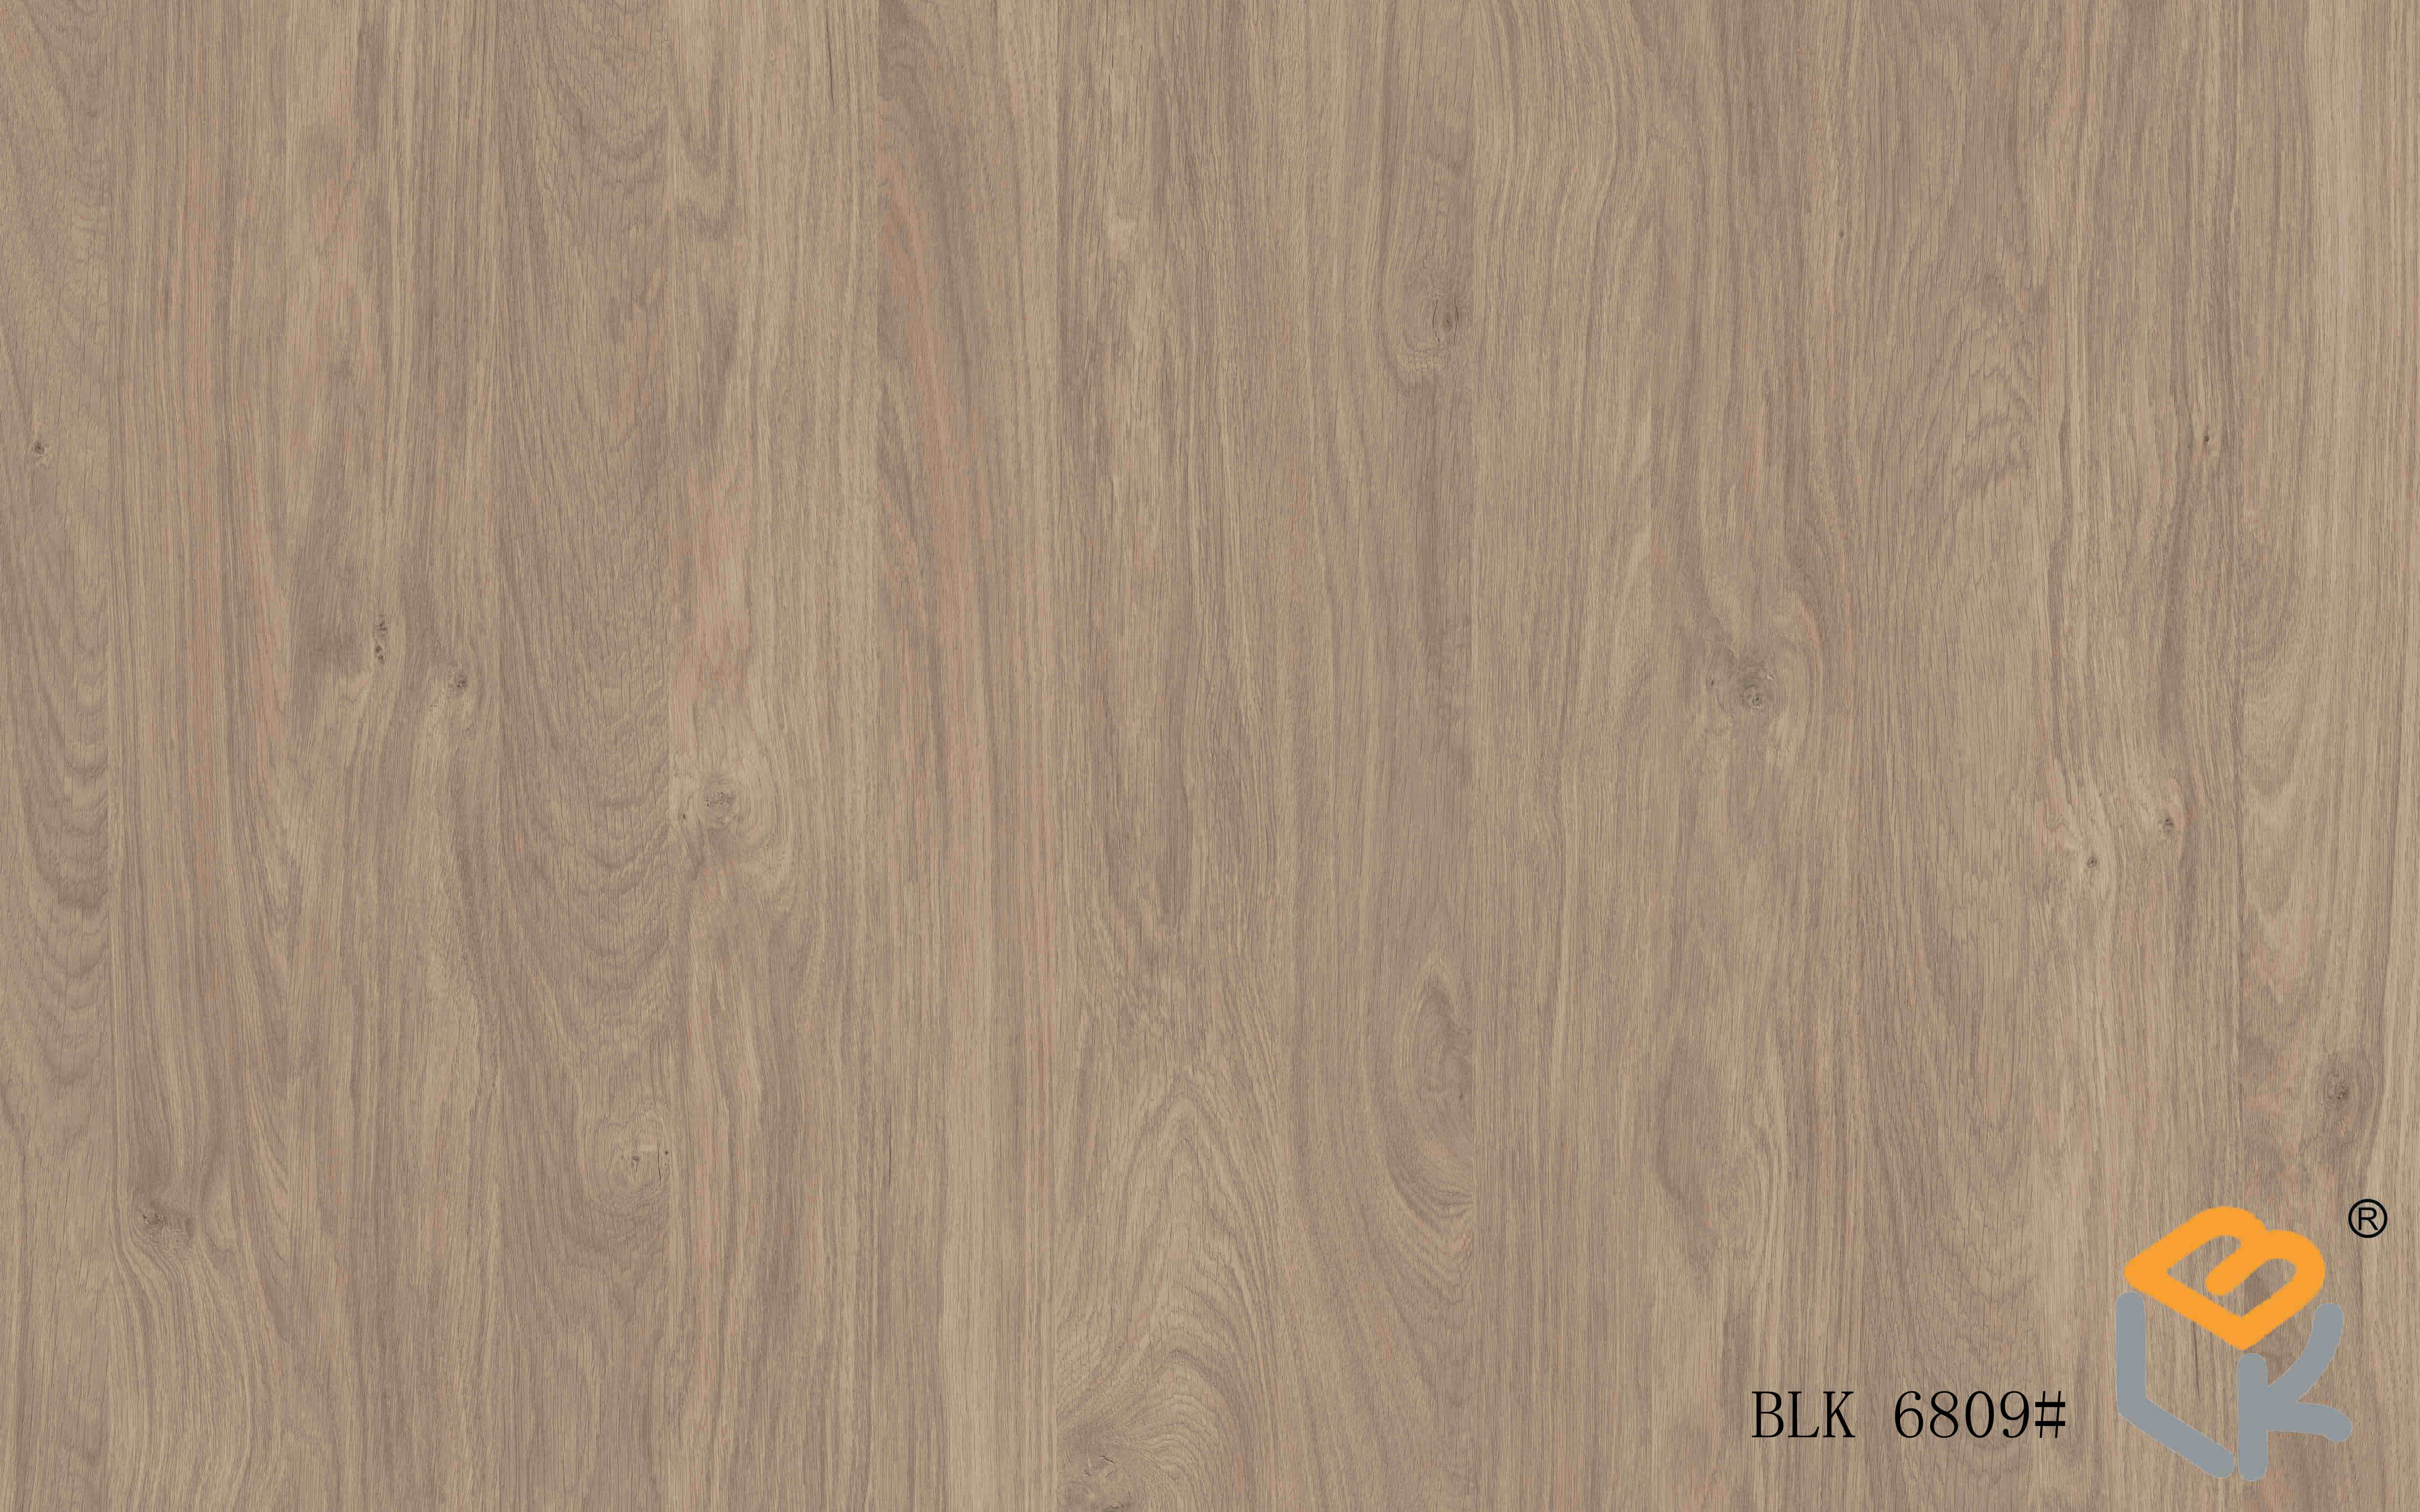 Oak woodgrain surface plywood from BLK Decor